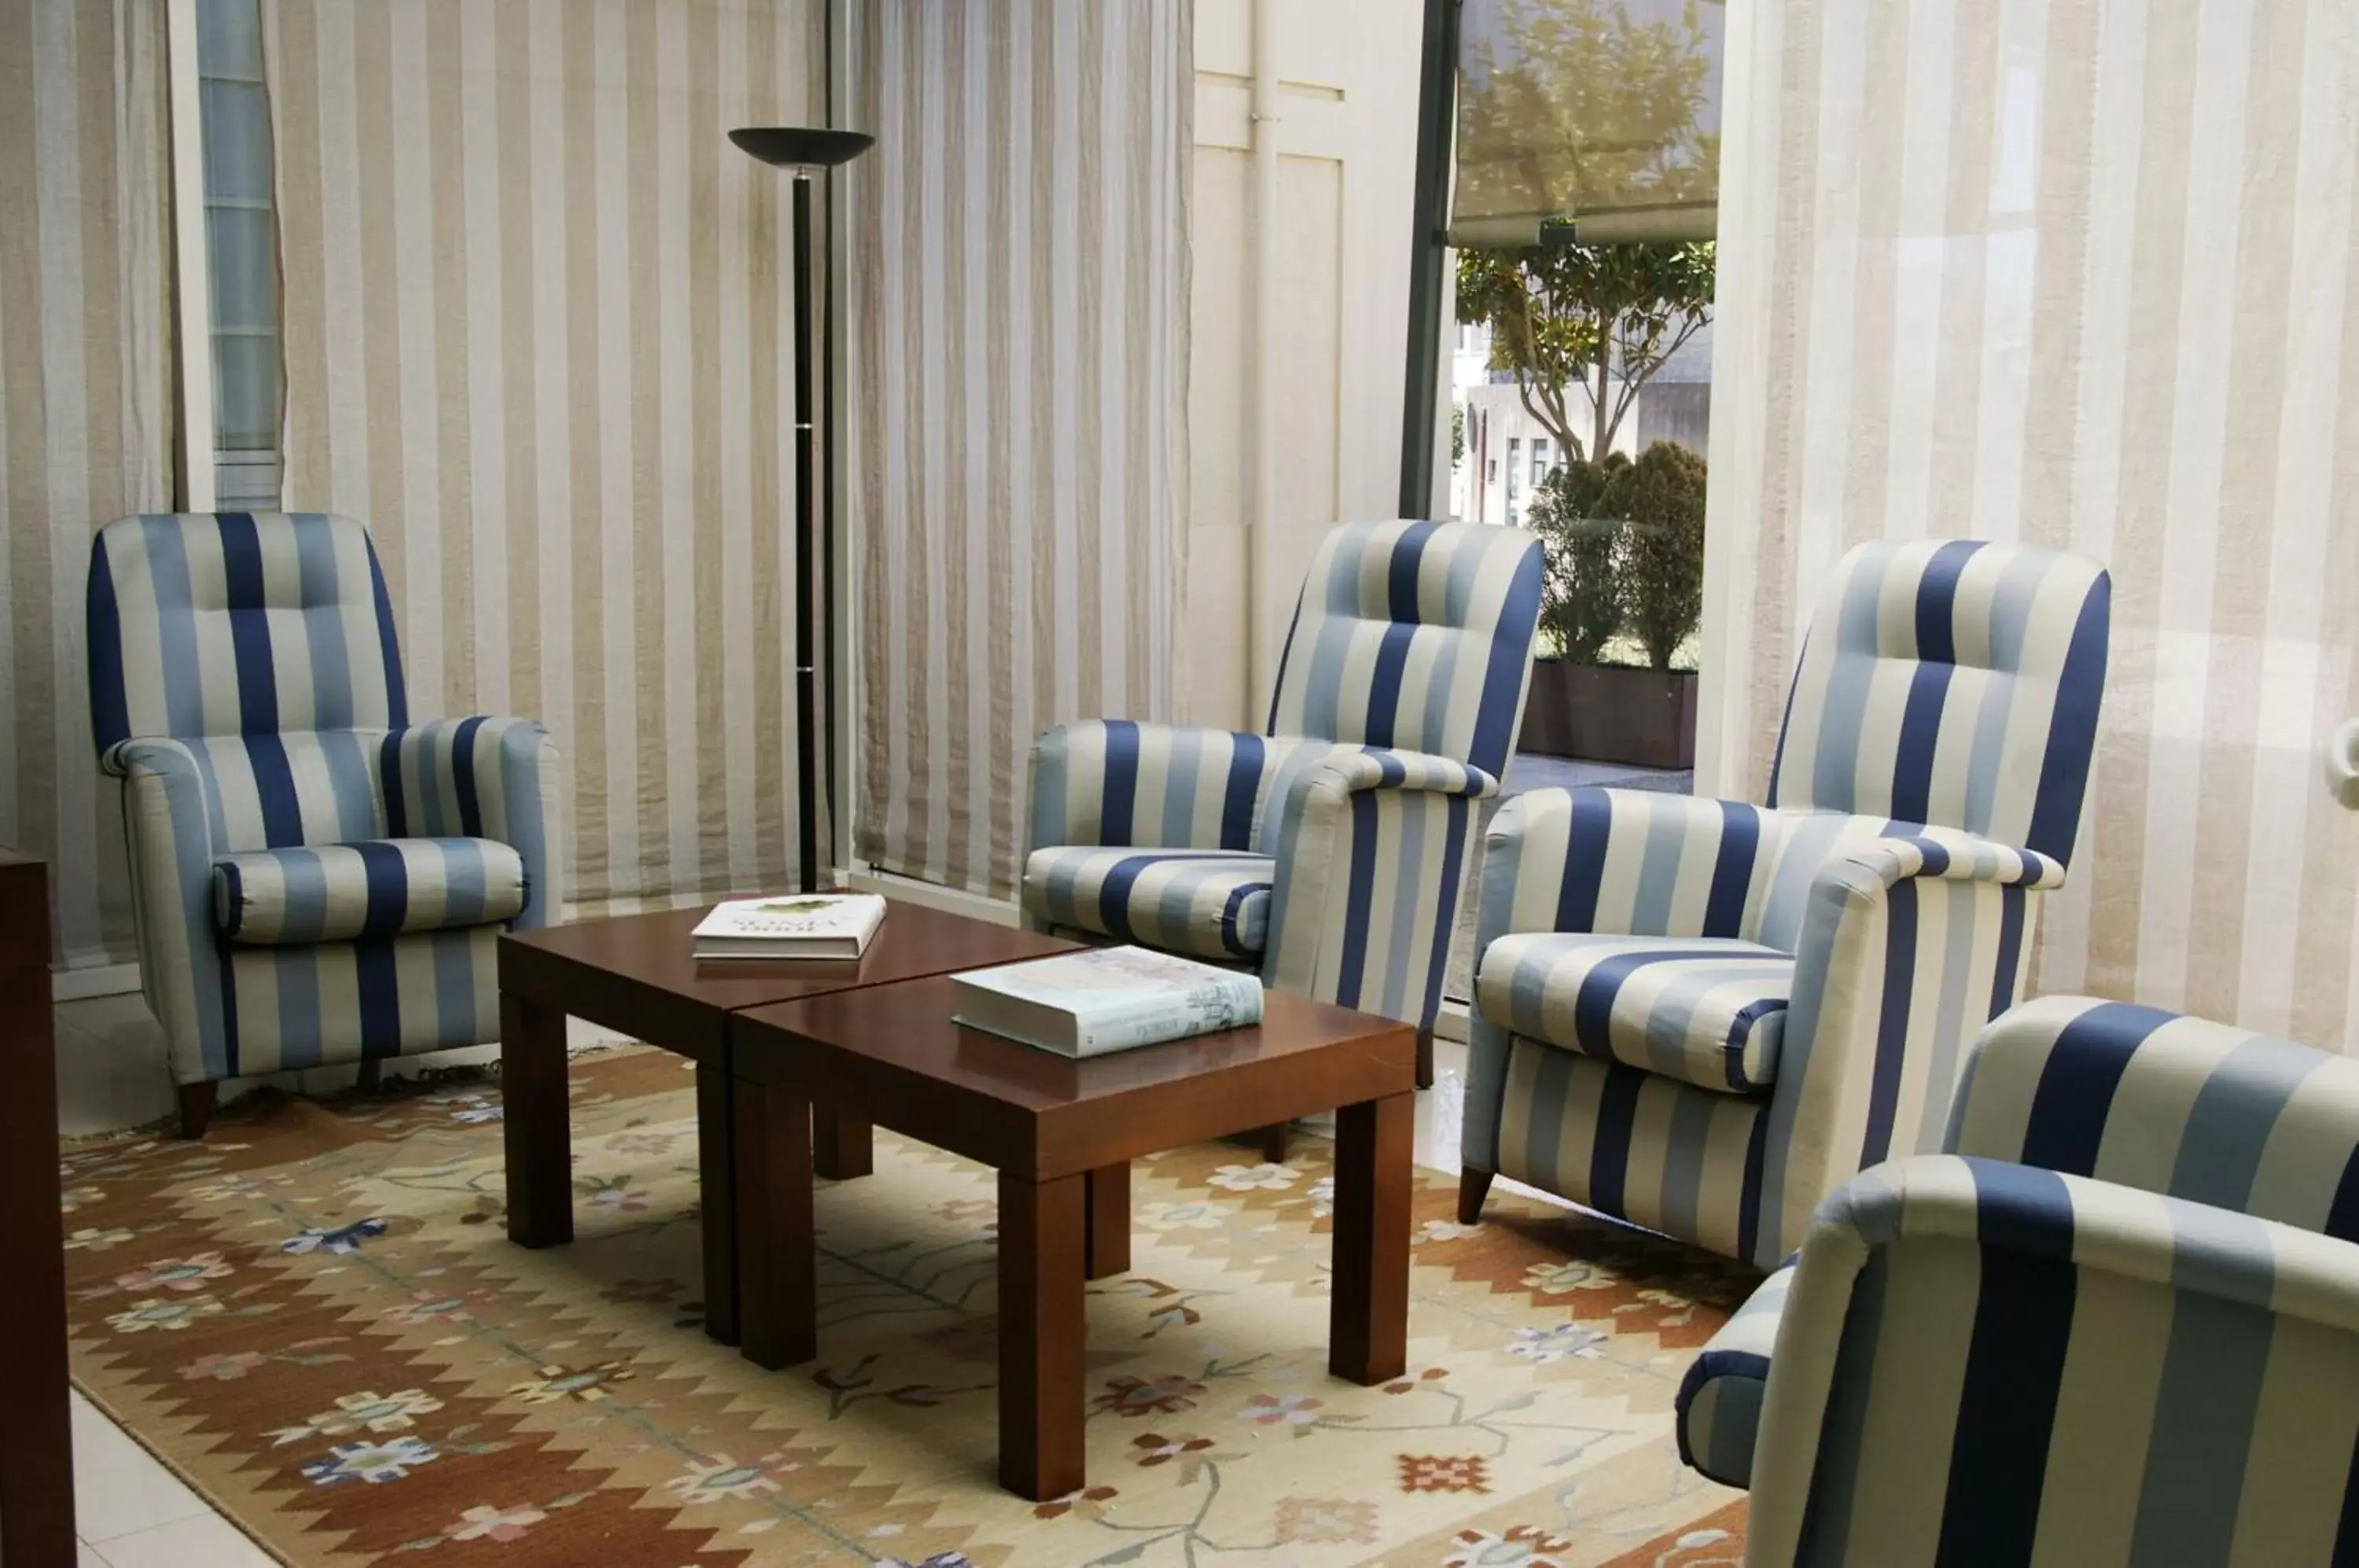 Communal lounge/ TV room, Seating Area in Hotel Villa De Betanzos